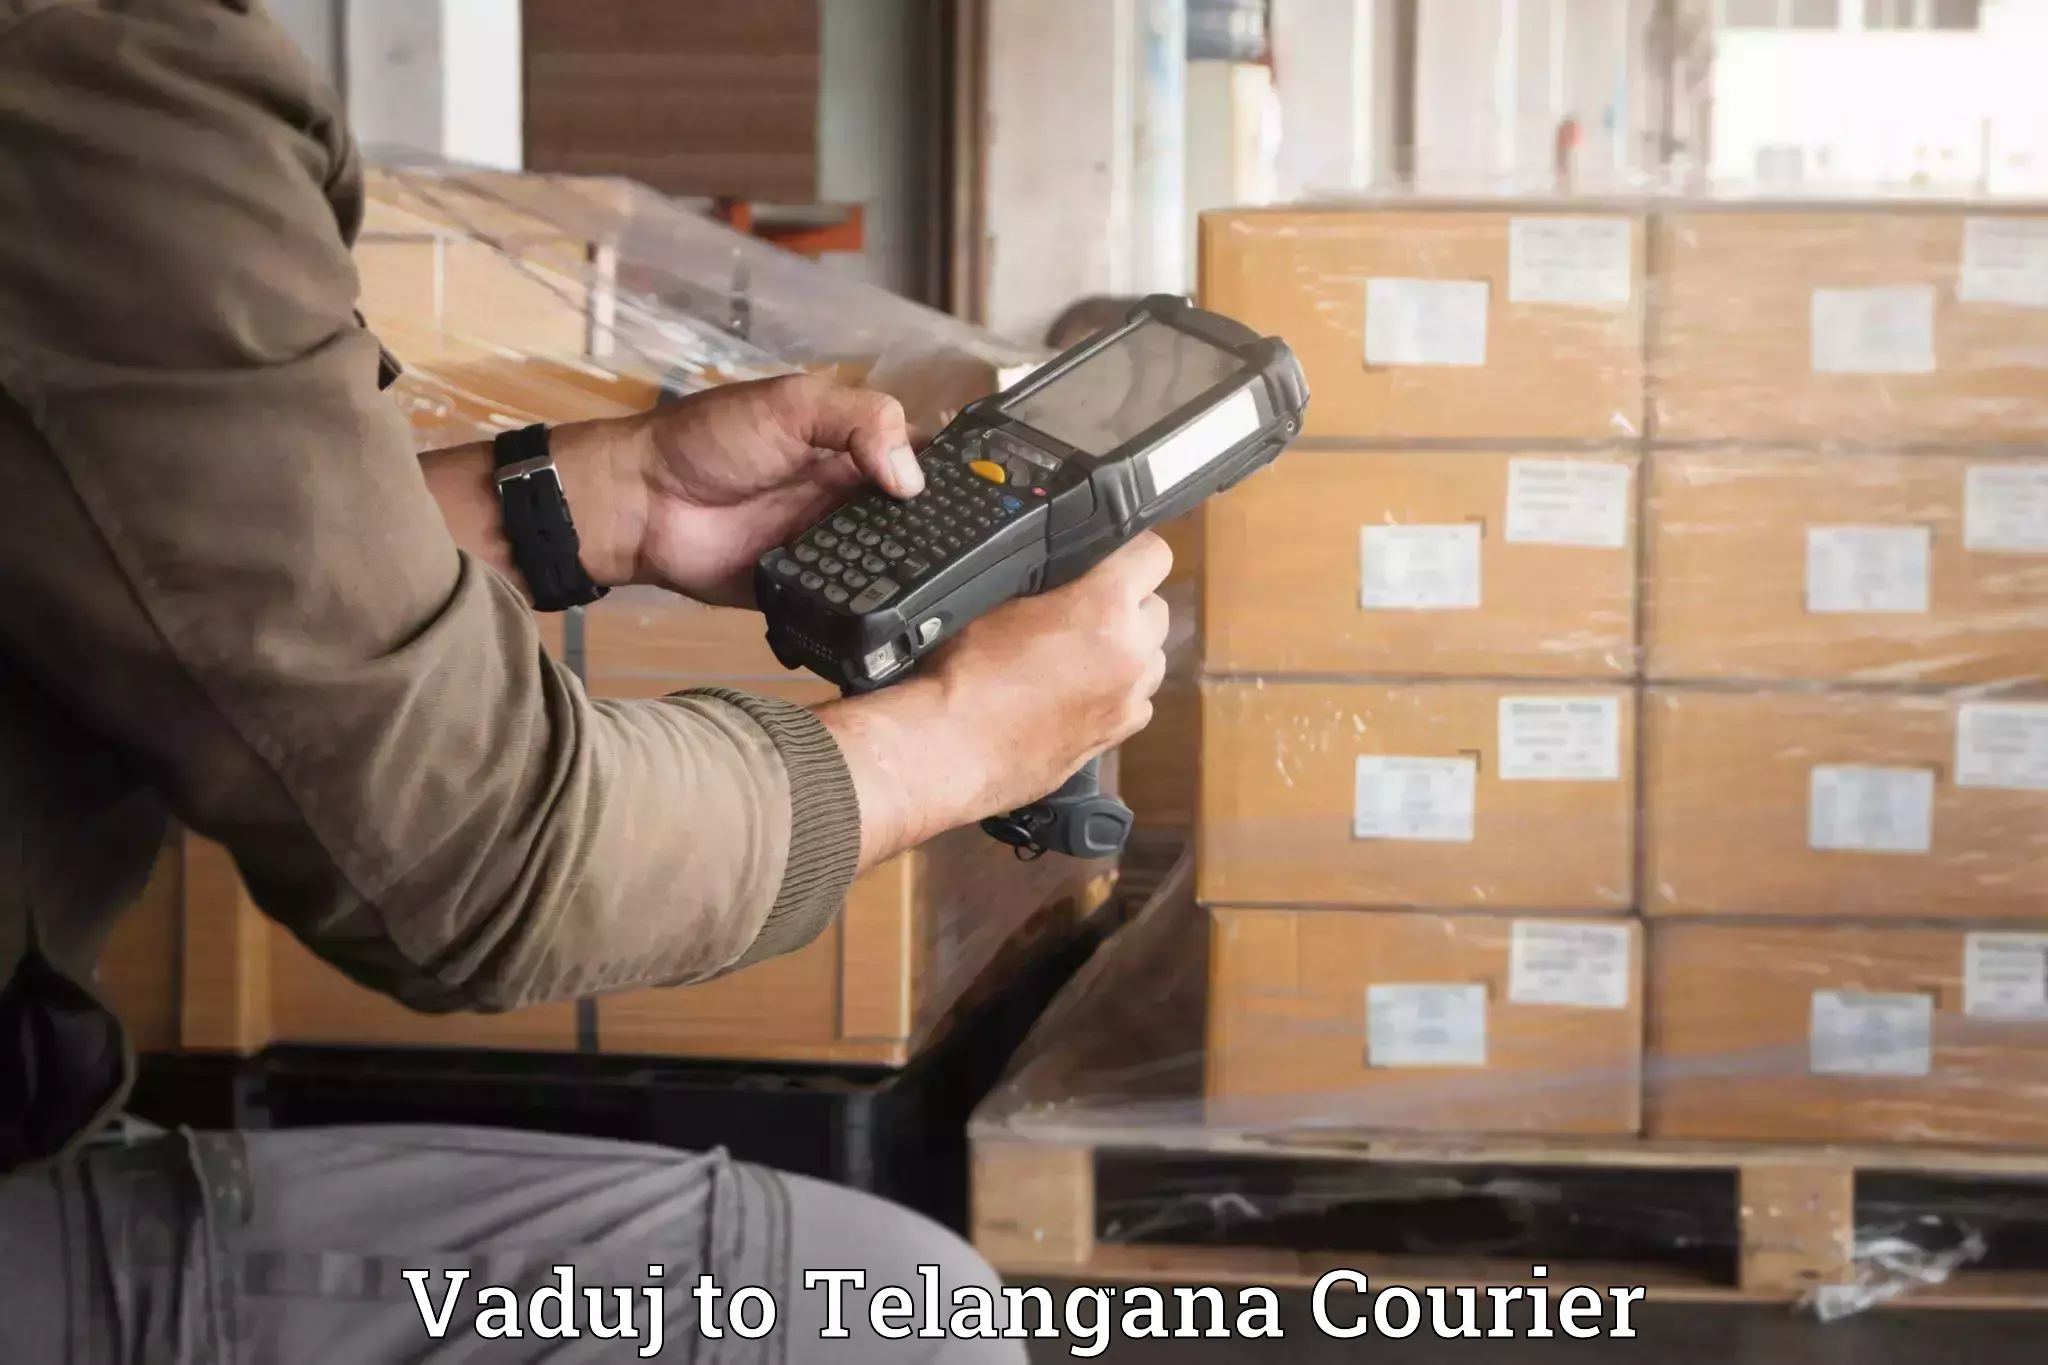 Door to door luggage delivery in Vaduj to Manneguda